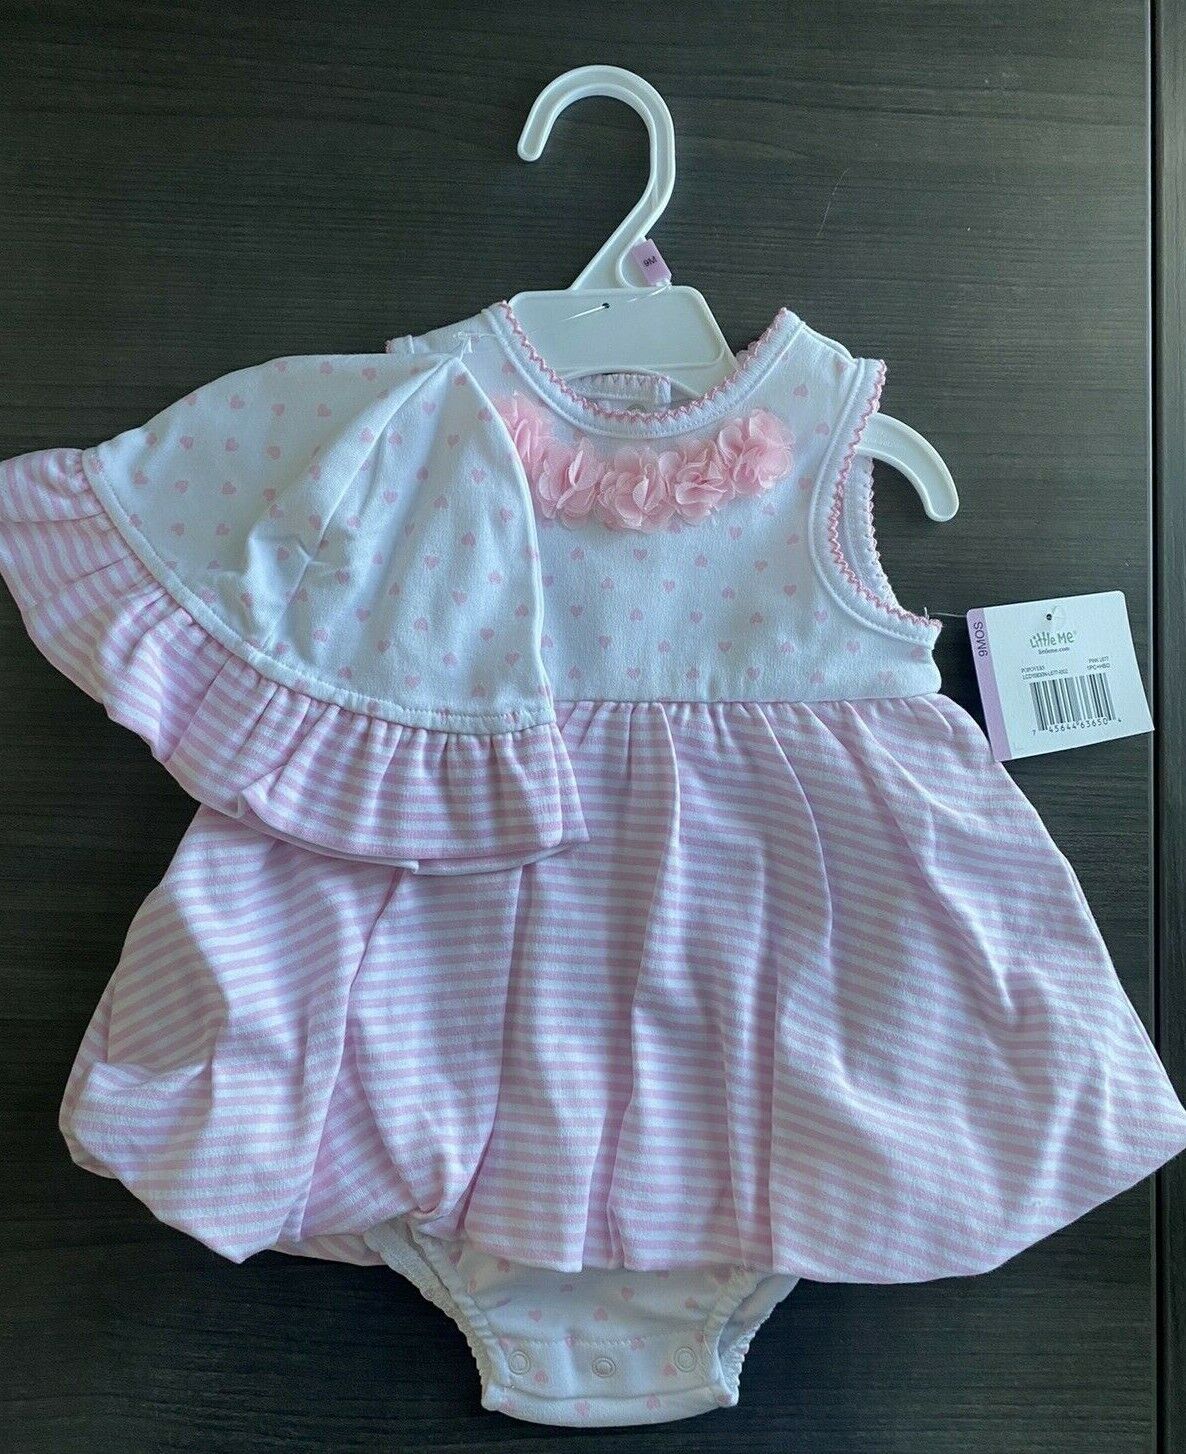 Little Me Baby 2 Piece Set (Dress & Hat) in Pink -9 Months